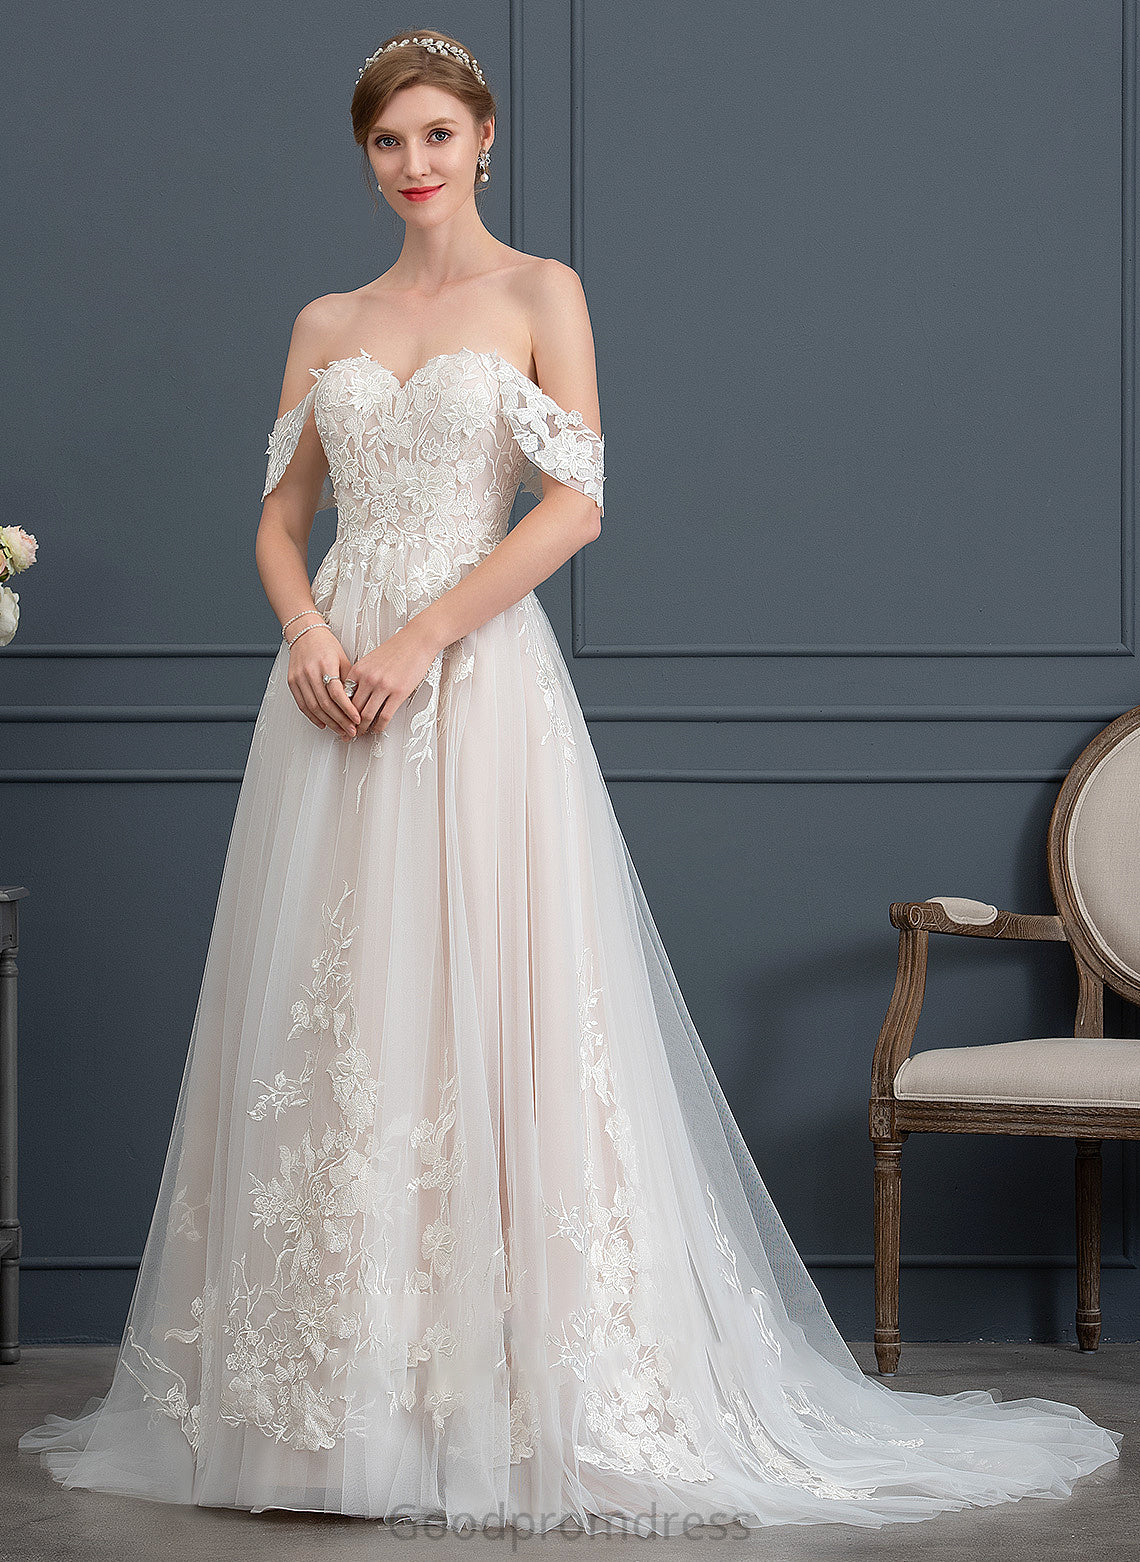 Tulle Logan Dress Wedding Dresses Sweep Sweetheart Train Ball-Gown/Princess Wedding